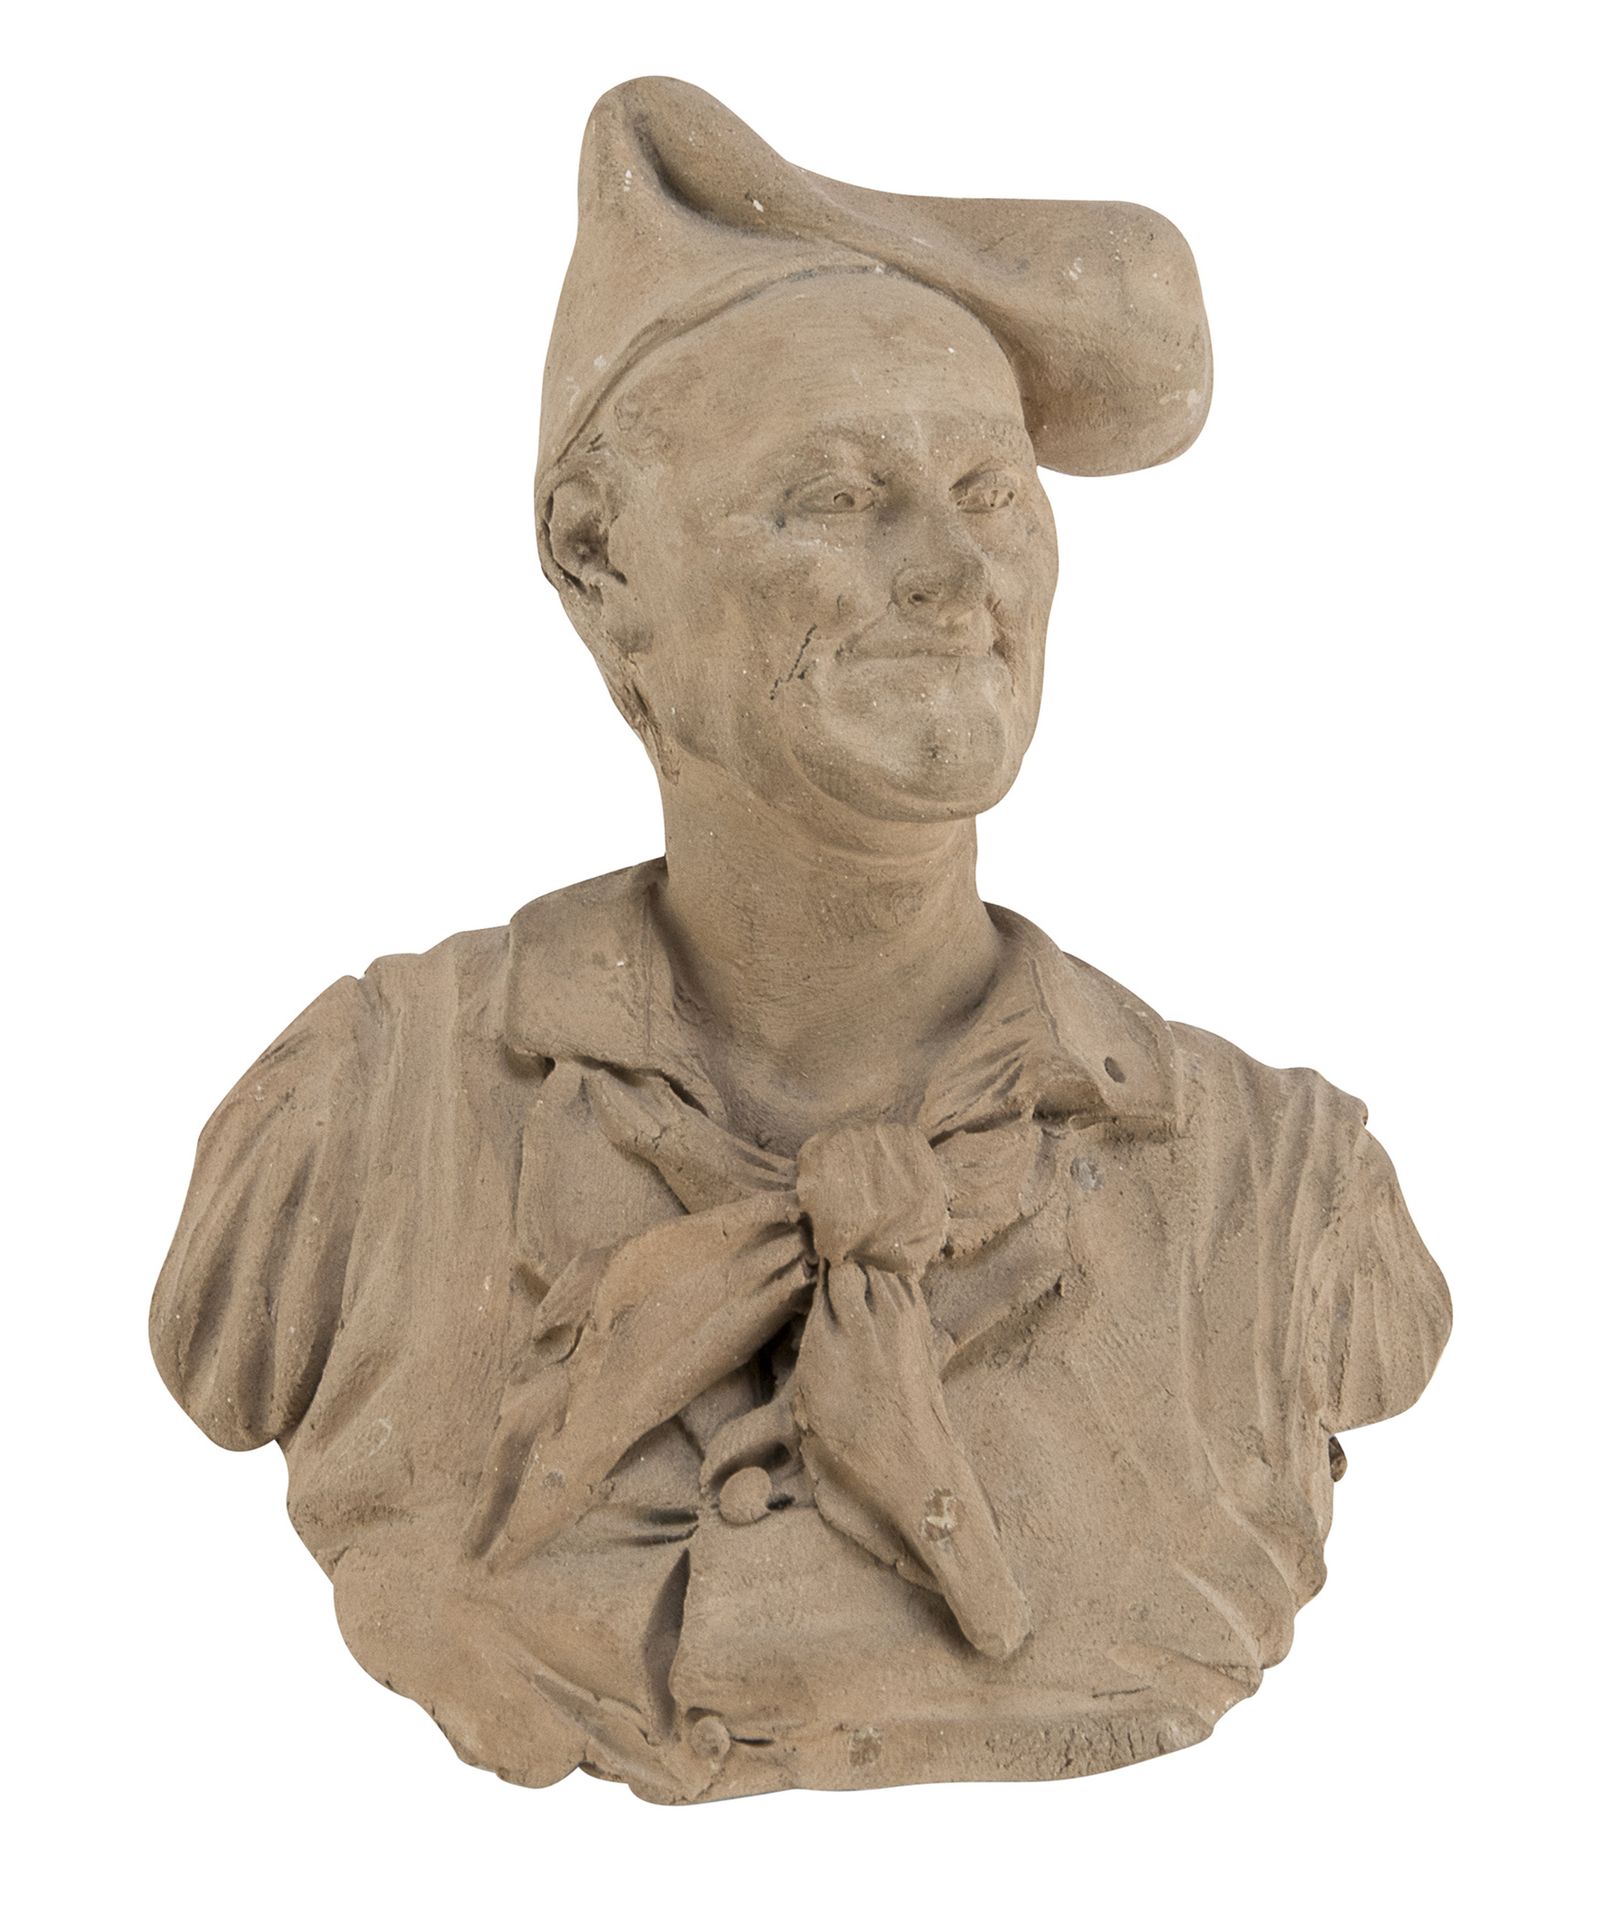 Null 陶器半身像，那不勒斯，19世纪

描绘了一个戴着弗里吉亚帽子的平民。

尺寸为8 x 9 x 10厘米。